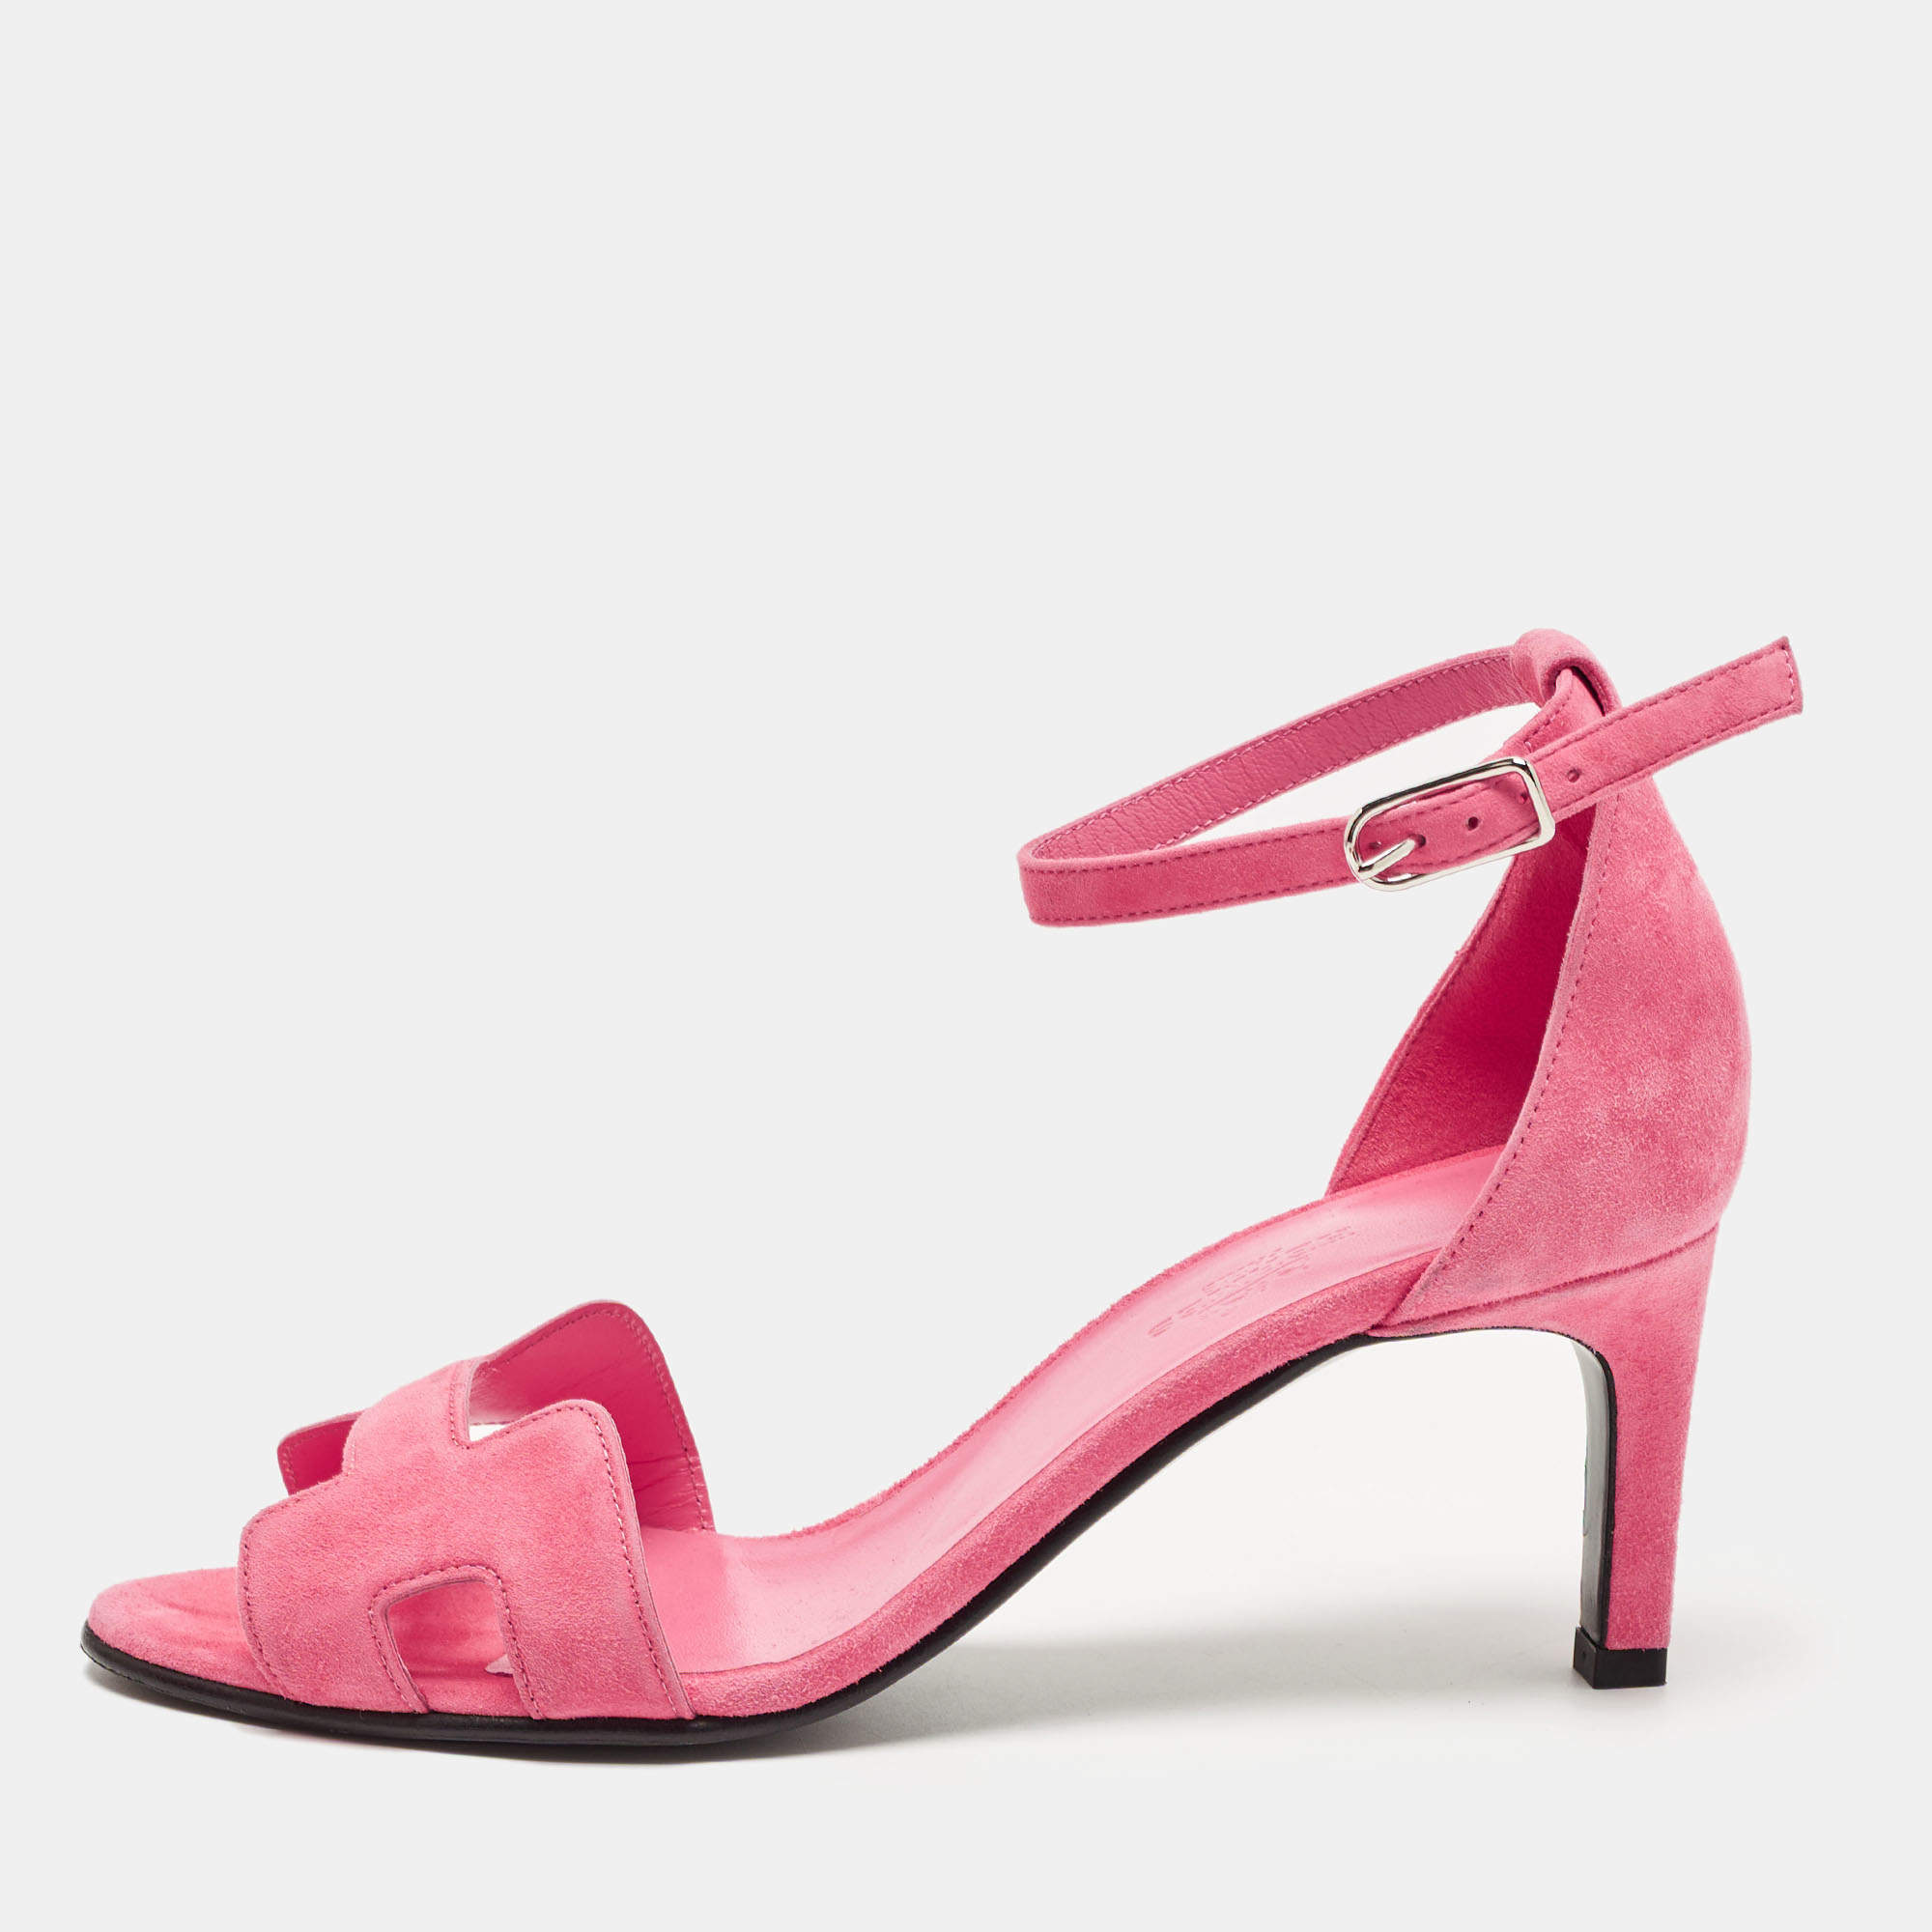 Hermes Pink Suede Premiere Sandals Size 35.5